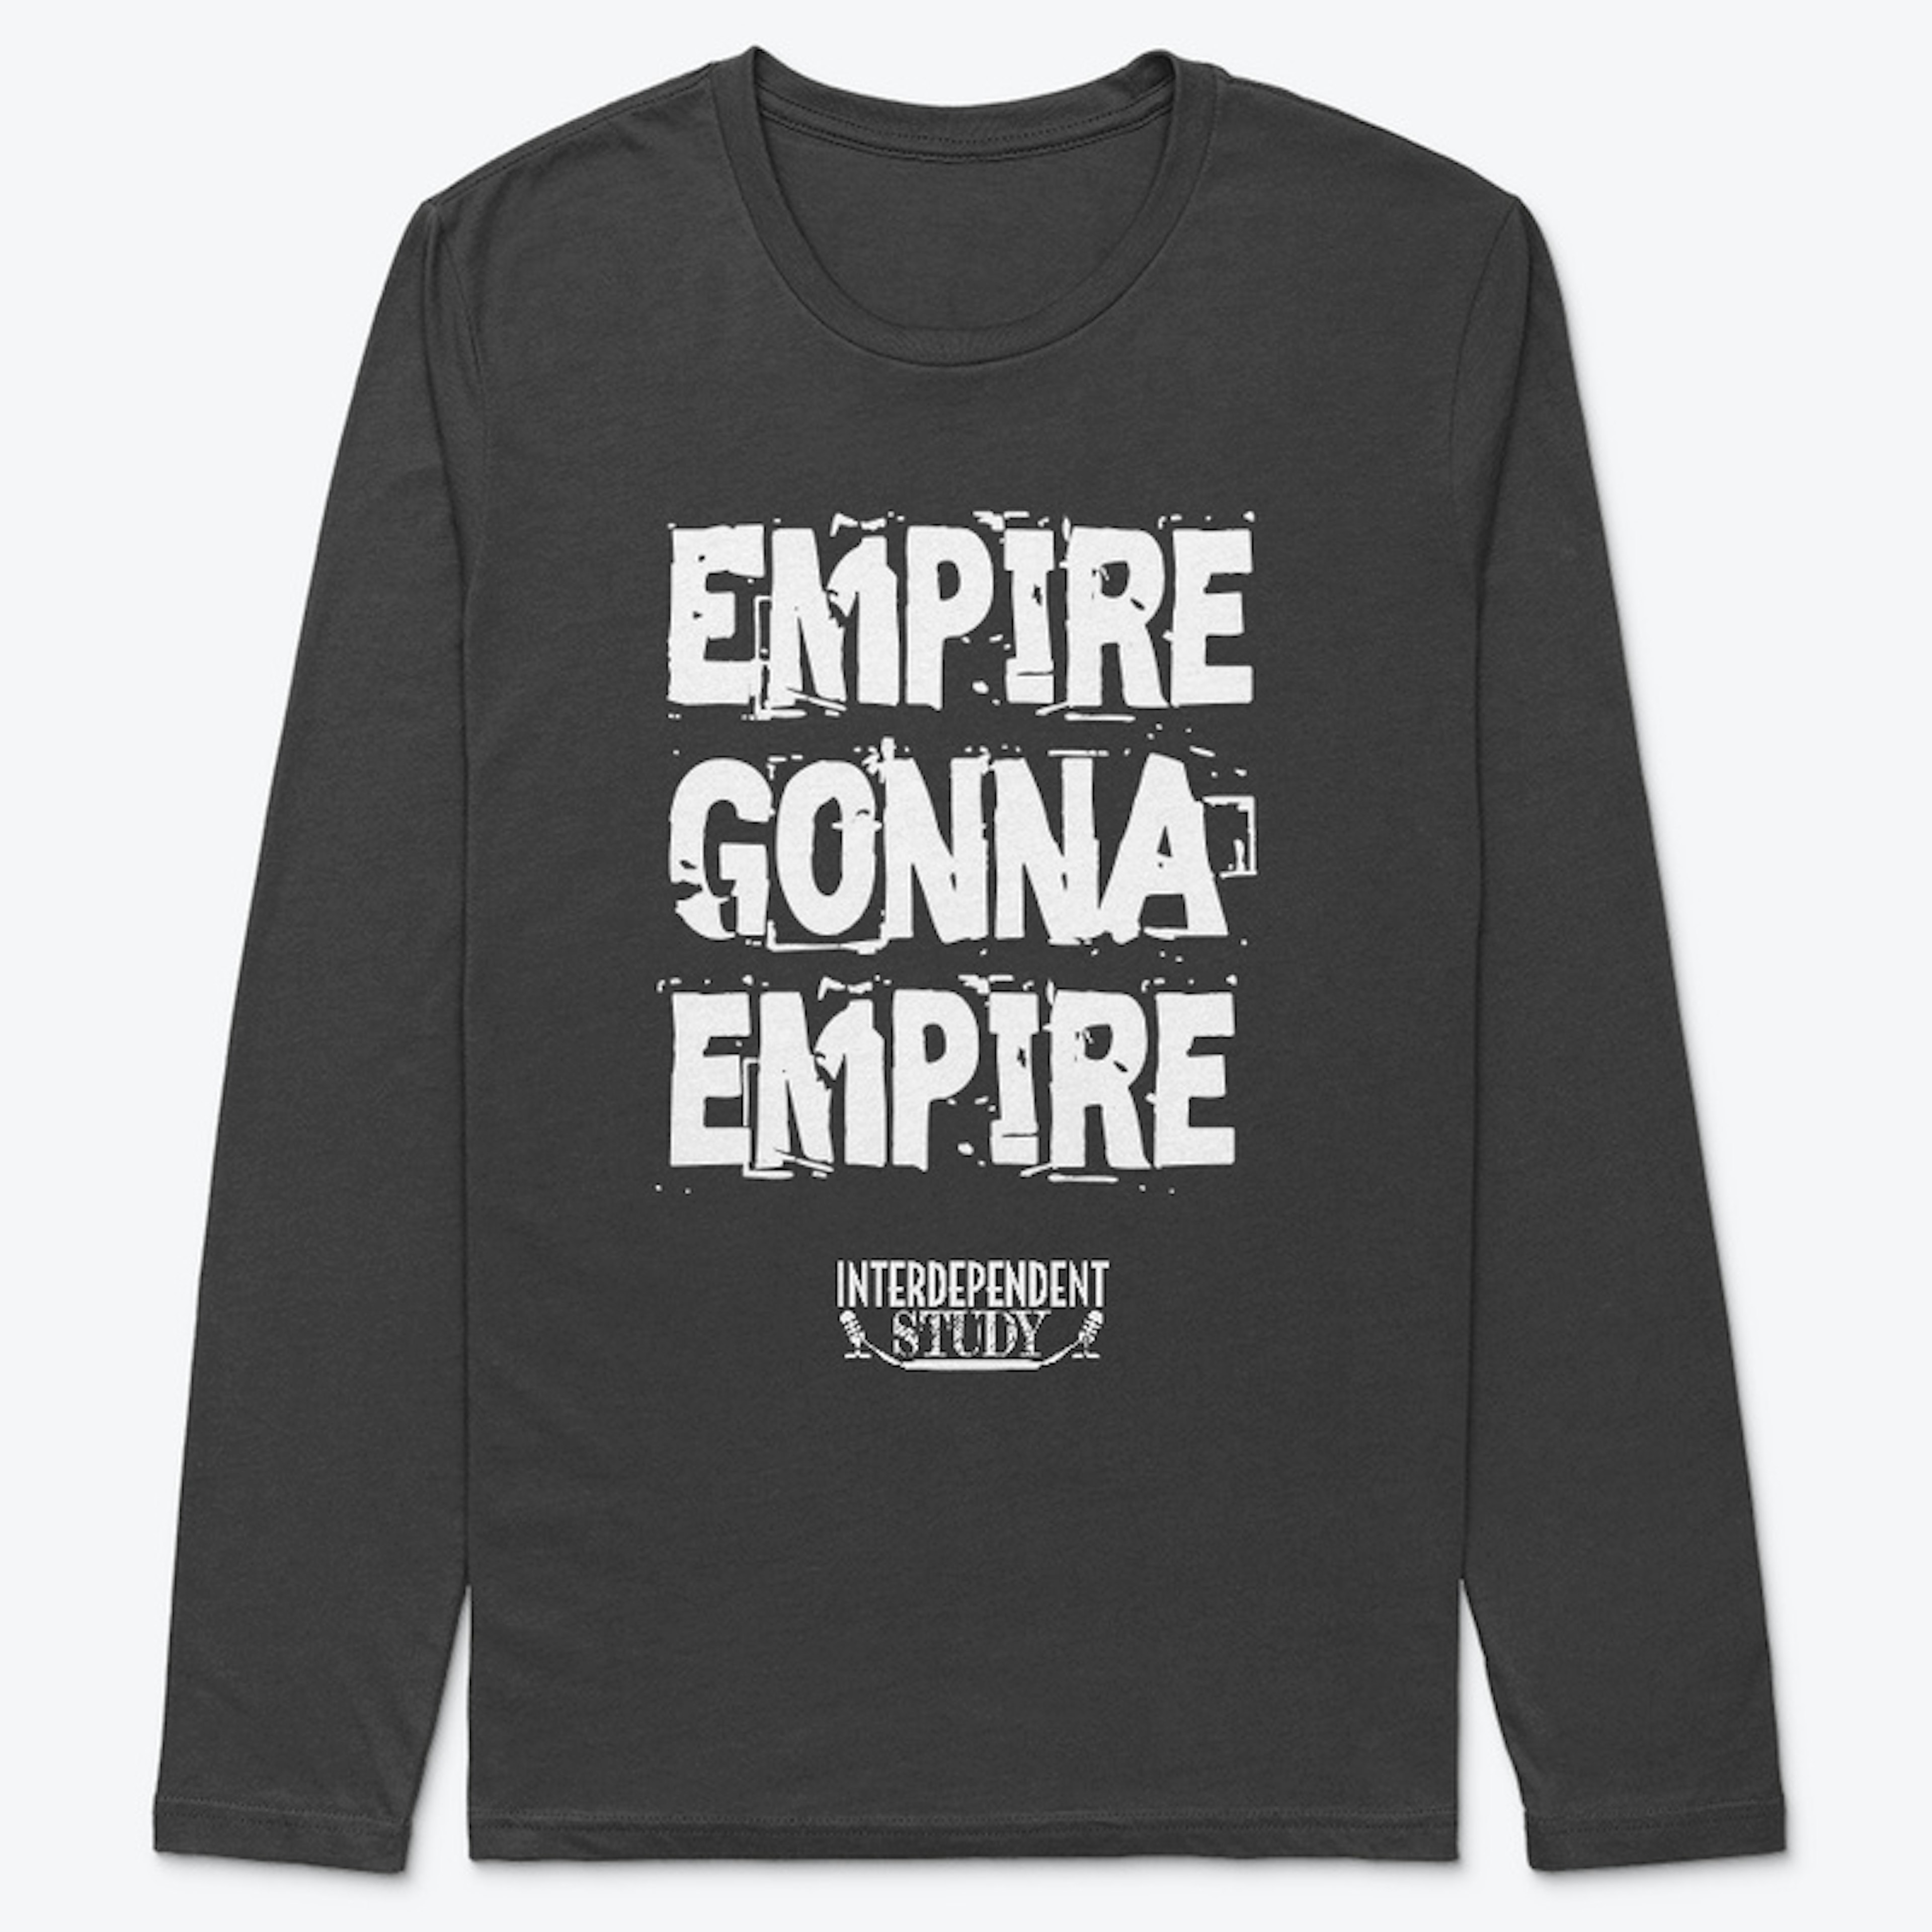 empire gonna empire